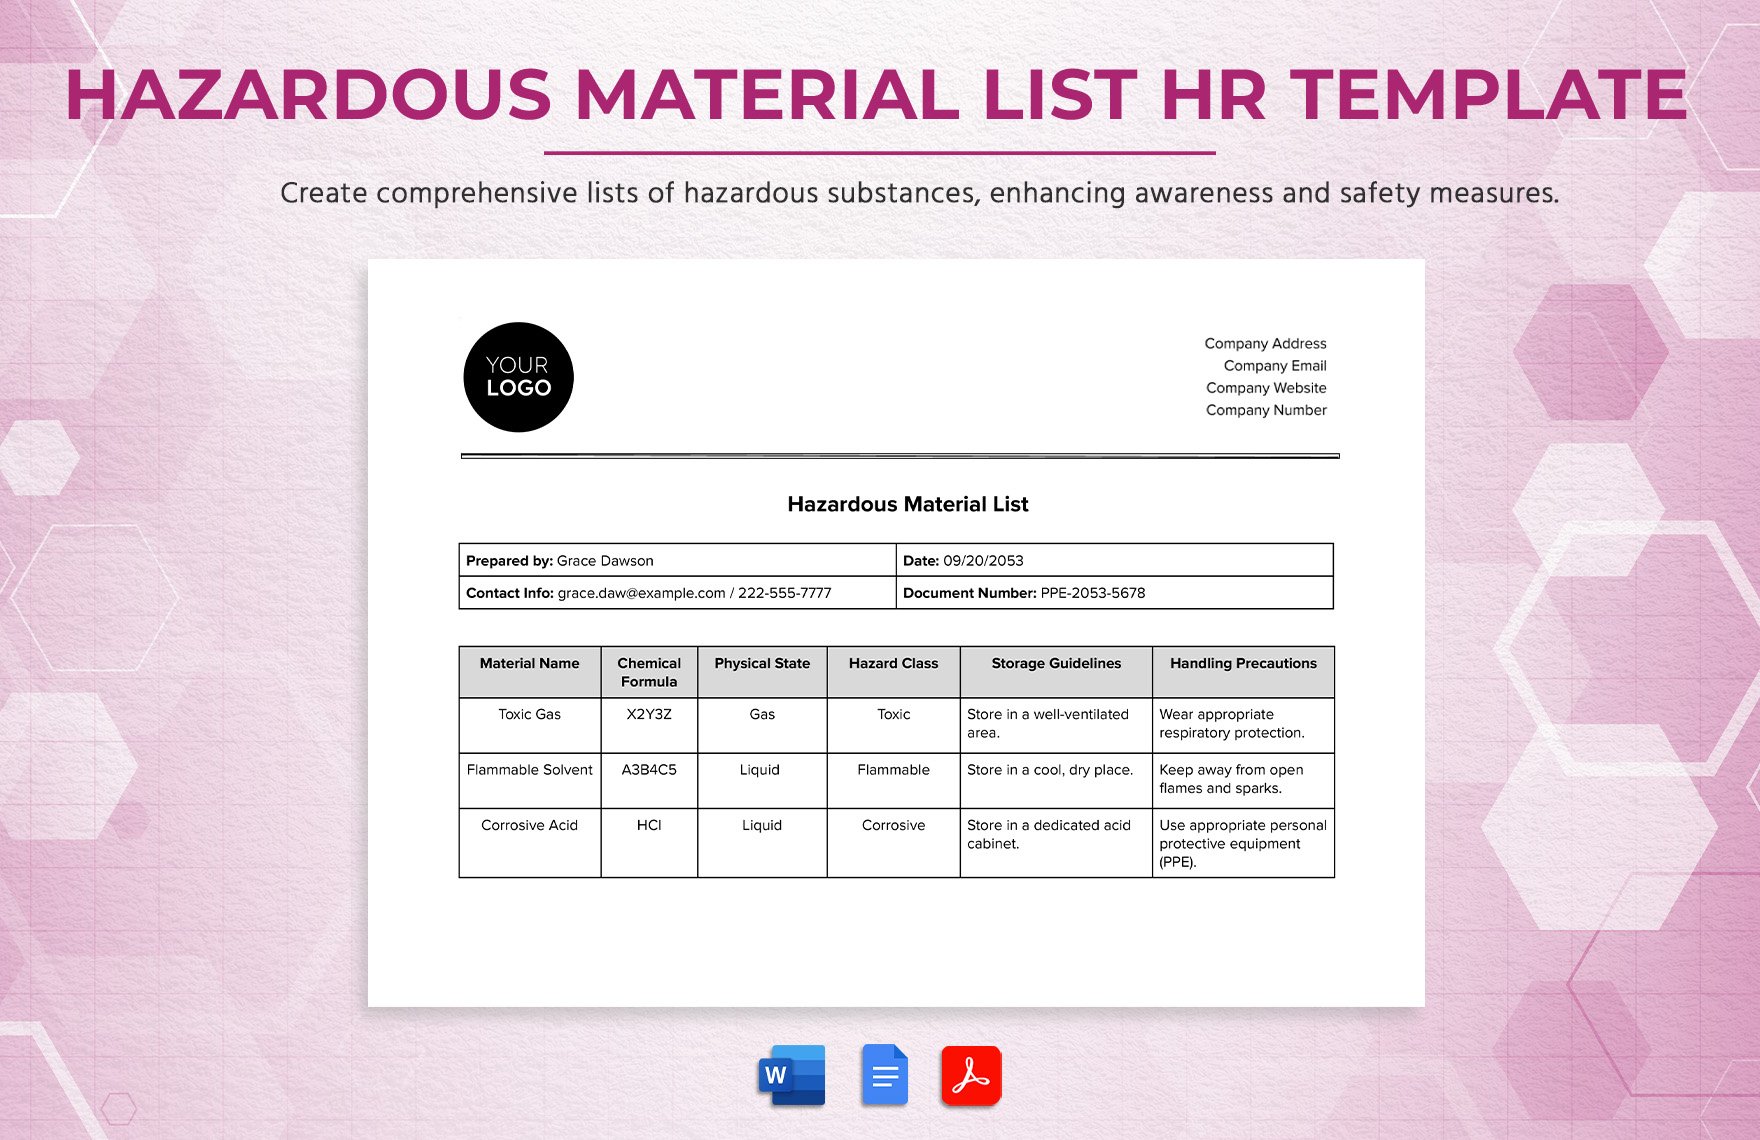 Hazardous Material List HR Template in Word, Google Docs, PDF